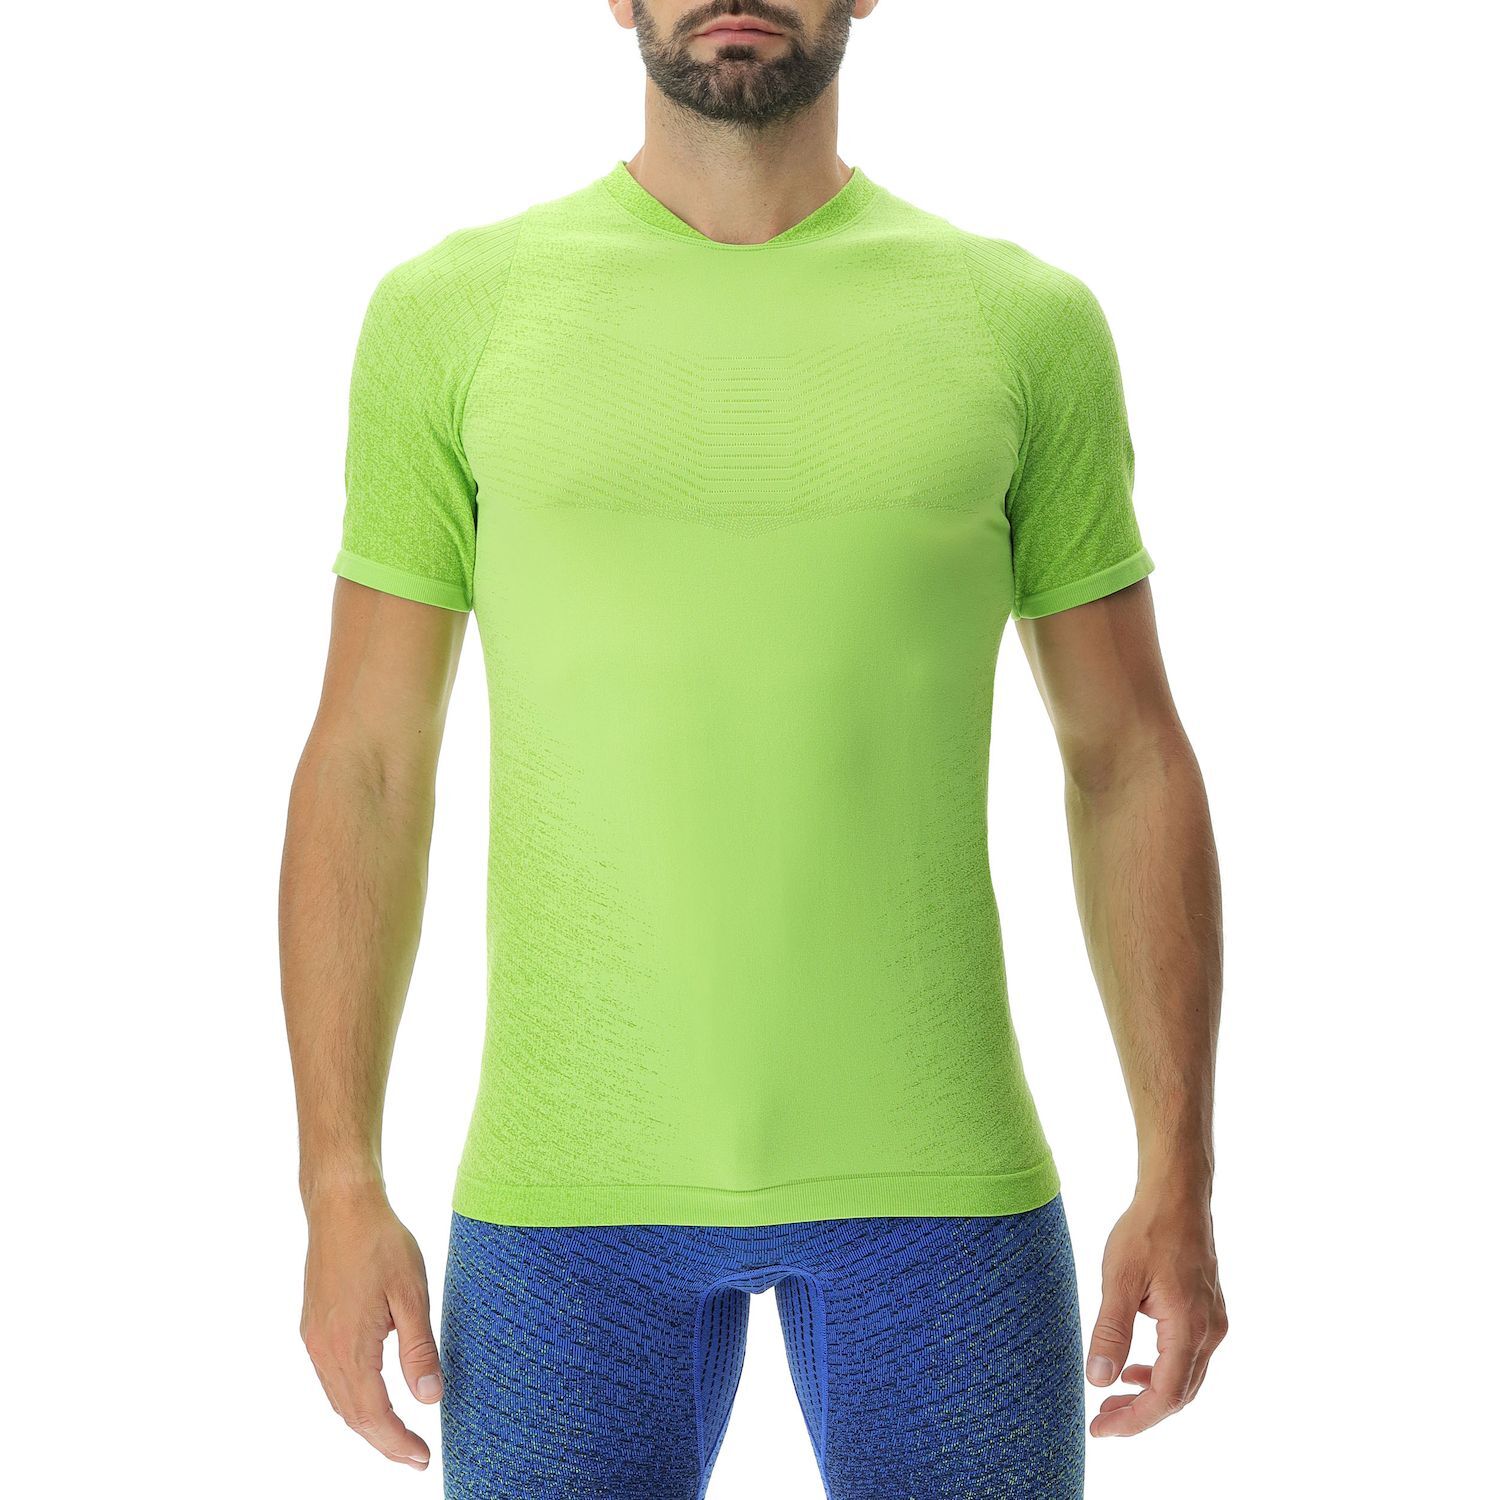 Uyn Running Exceleration Ow Shirt - T-shirt meski | Hardloop